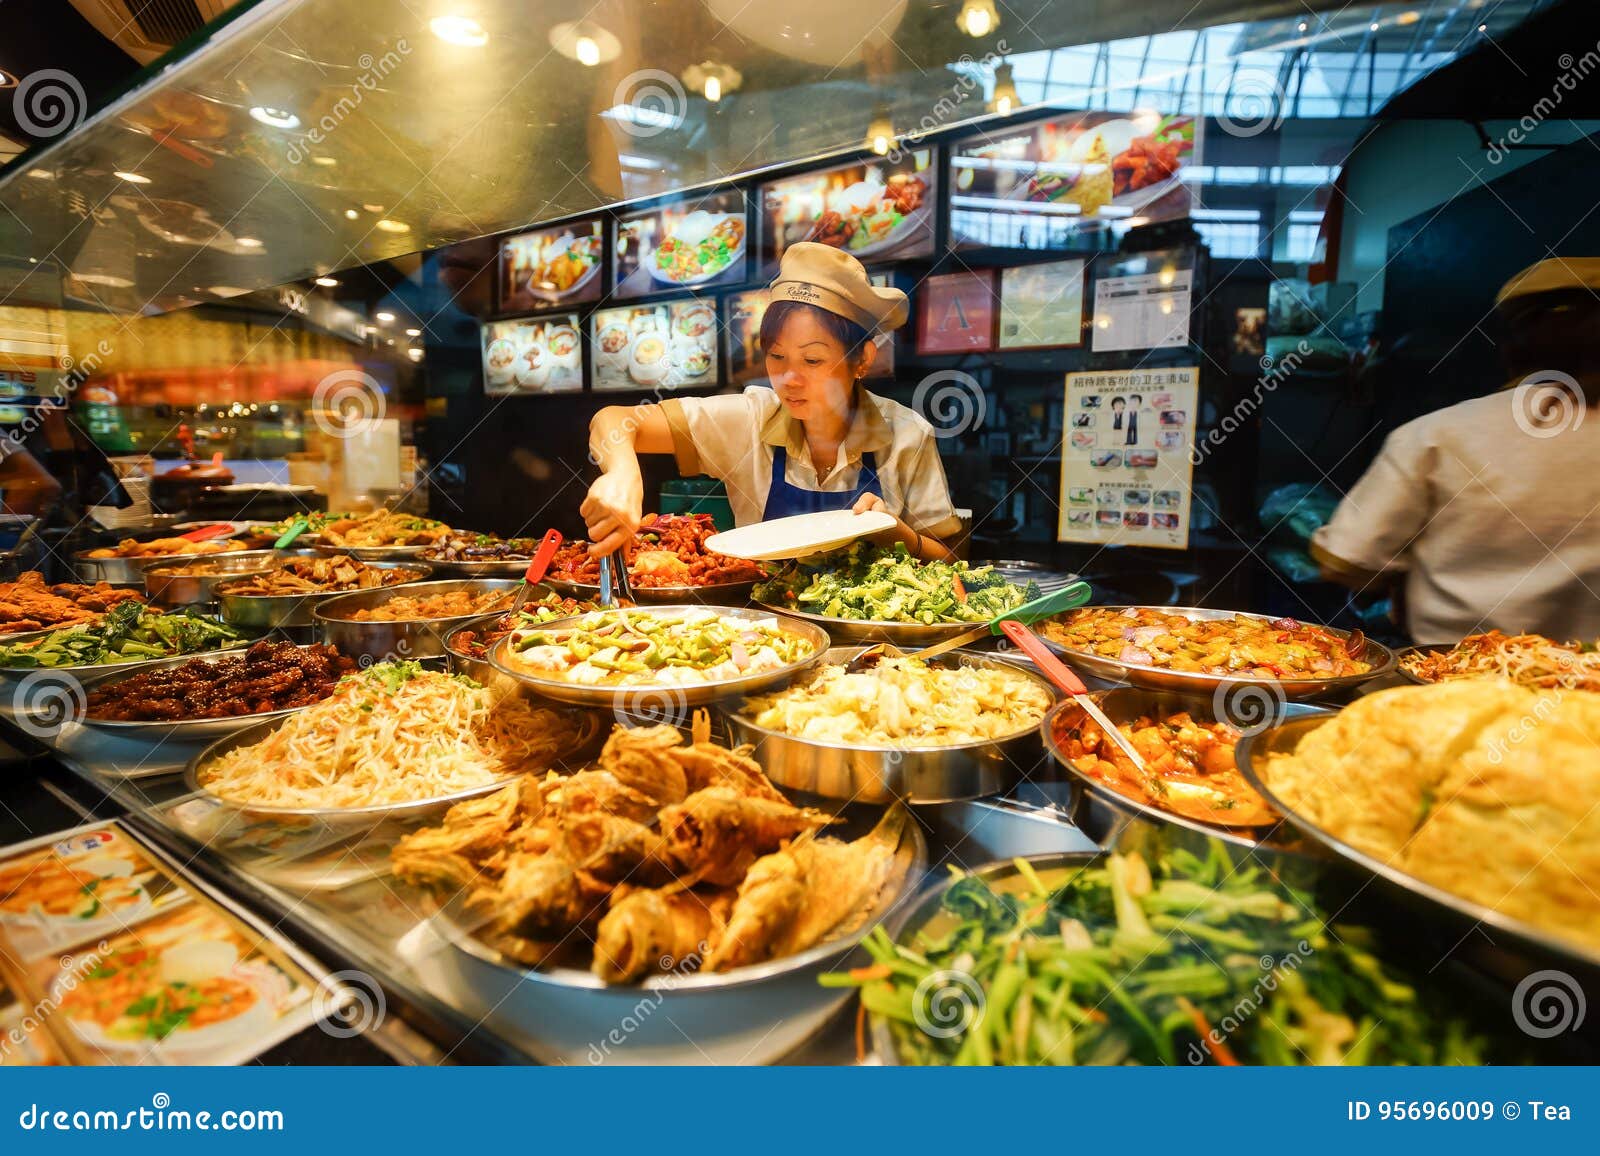 The Shoppes at Marina Bay Sands Editorial Stock Image - Image of meal,  marina: 95696009